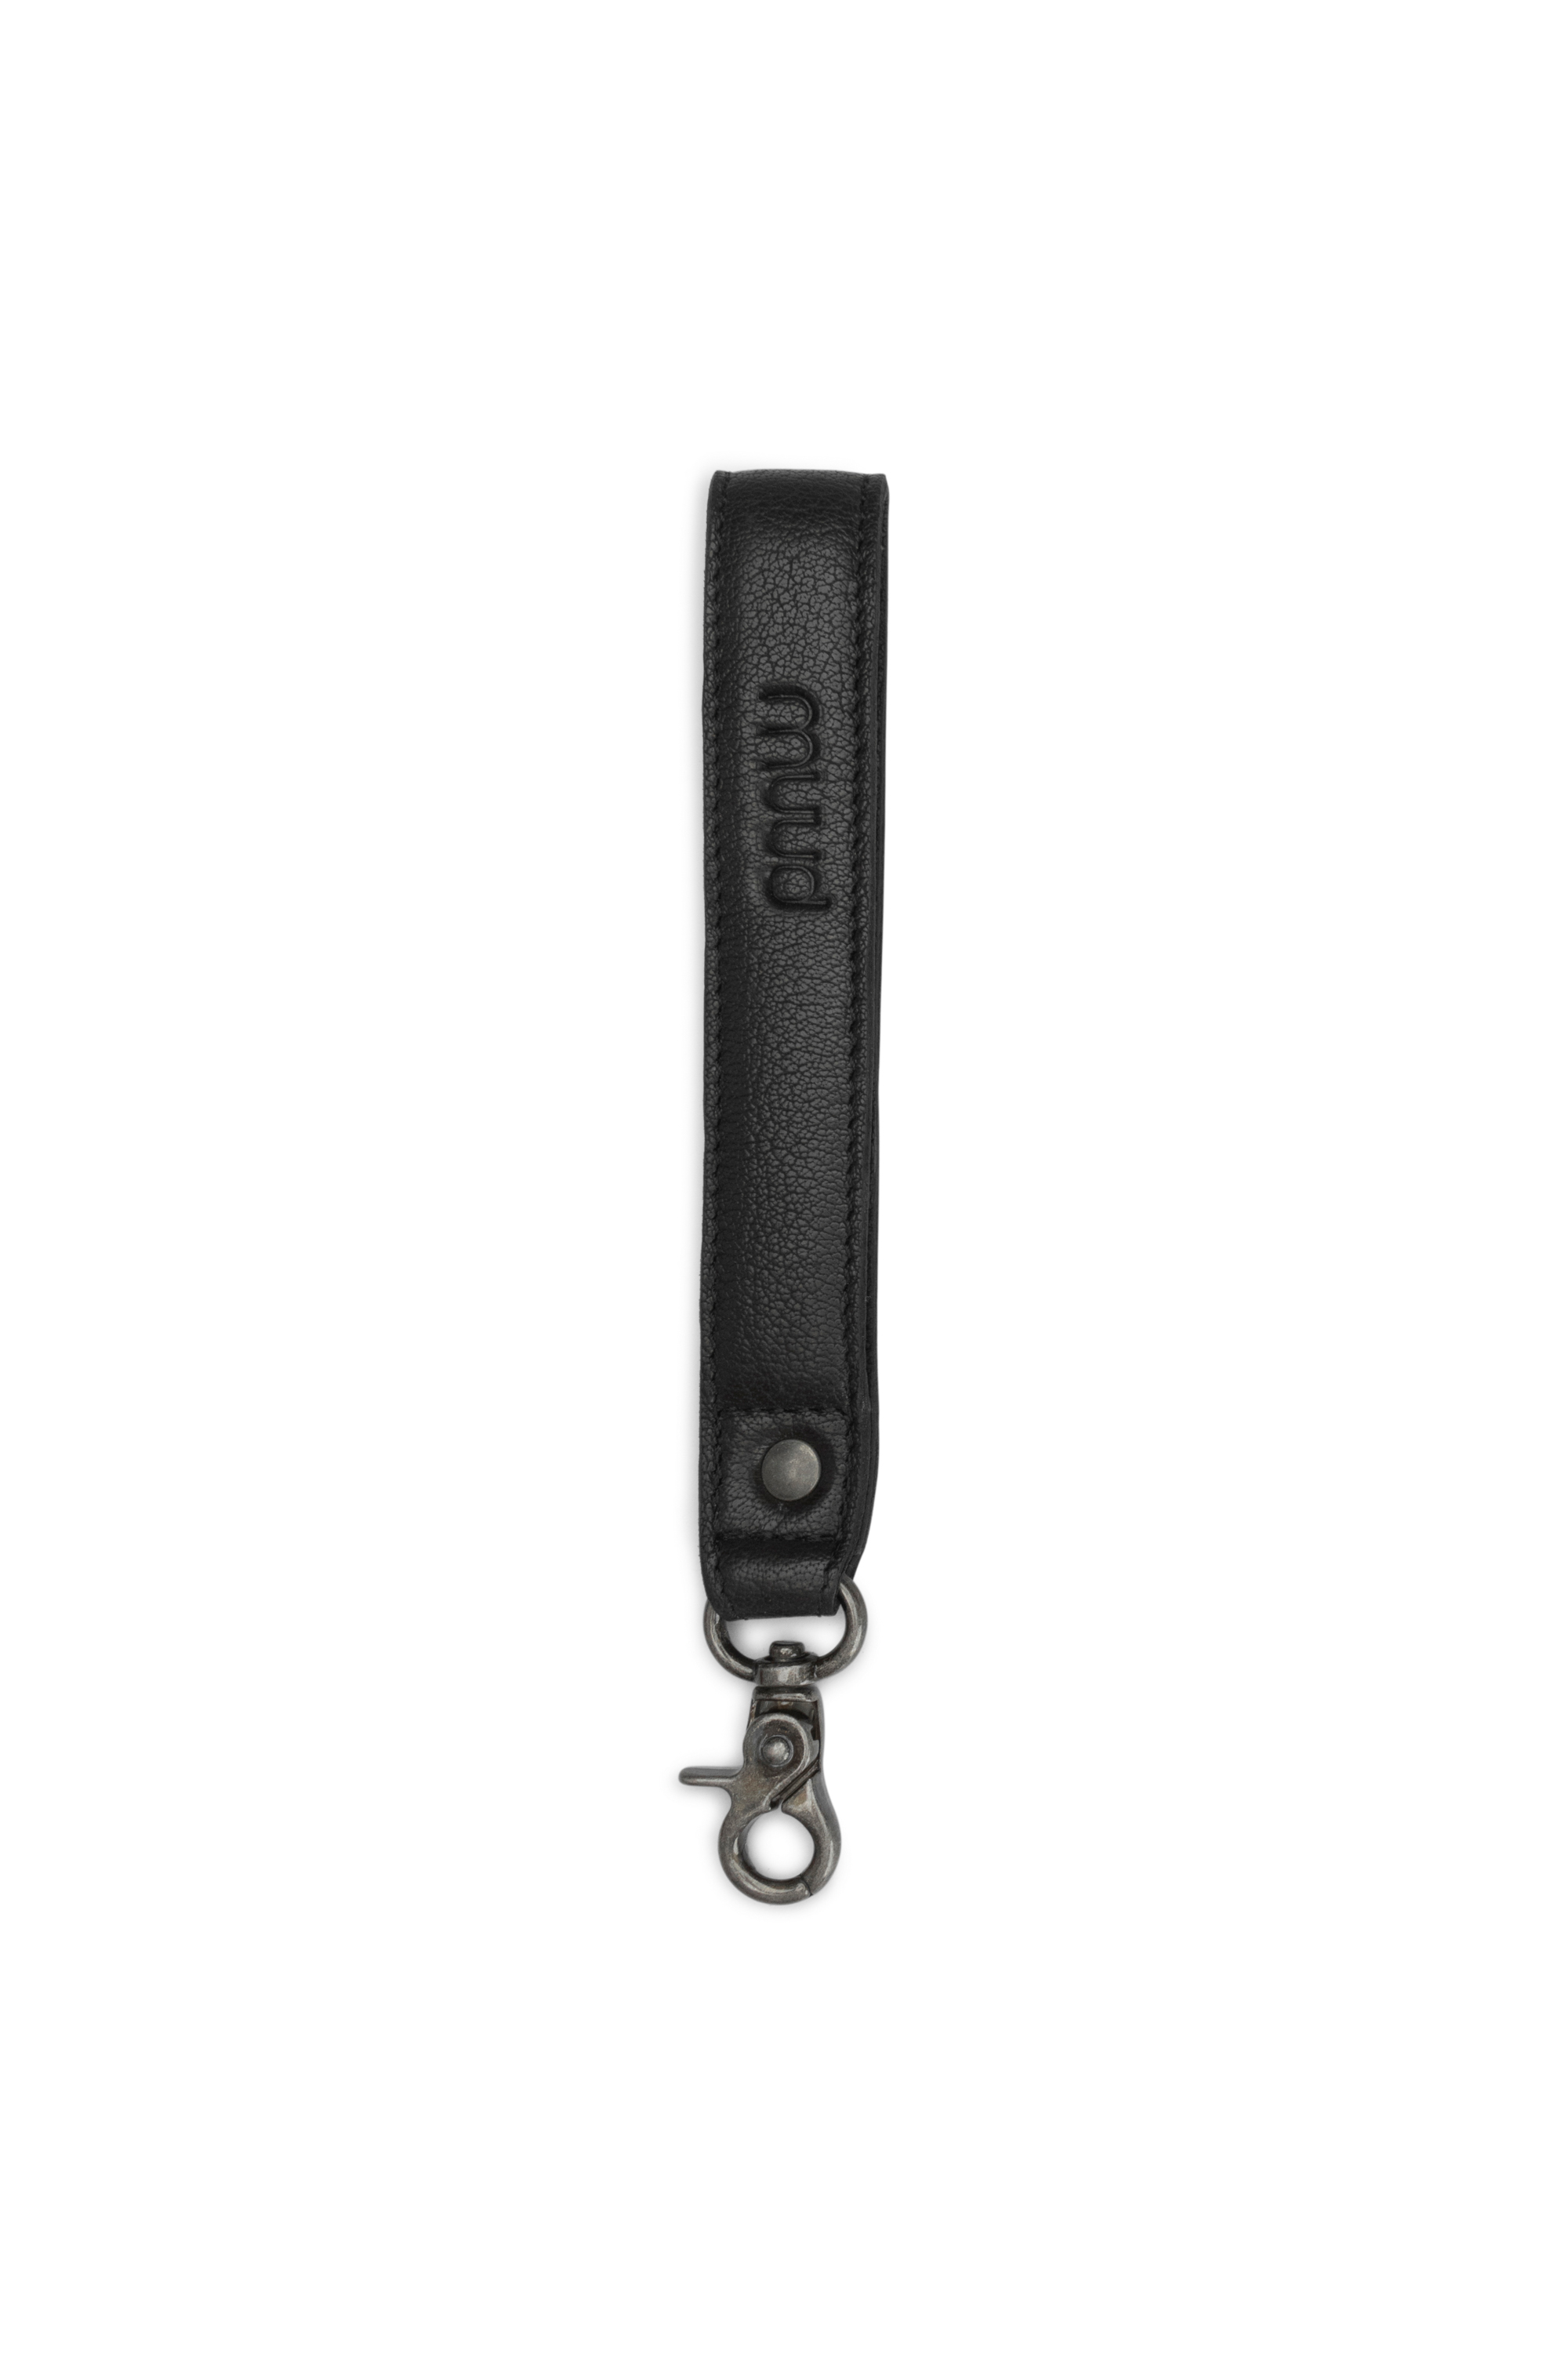 muud Cami XL, nøglering, læder, sort thumbnail